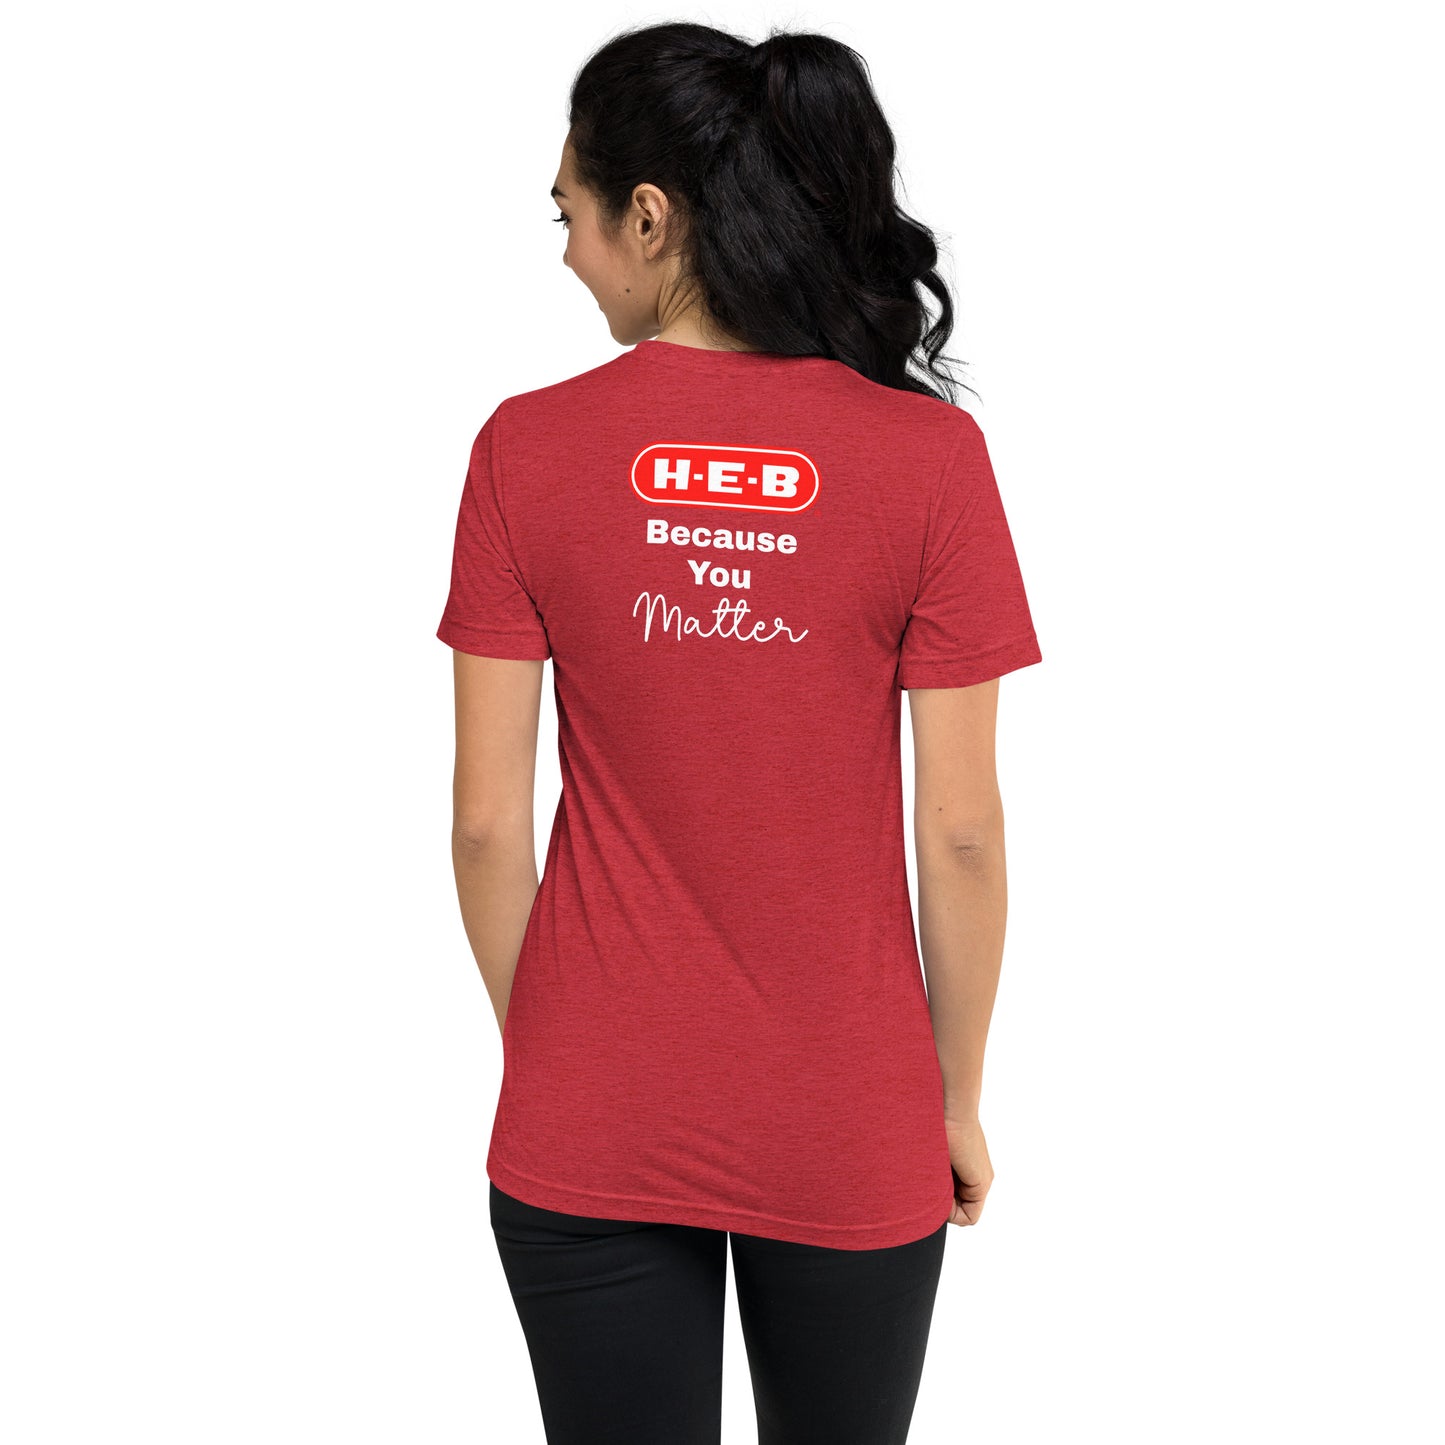 HEB Because You Matter Short sleeve t-shirt CedarHill Country Market